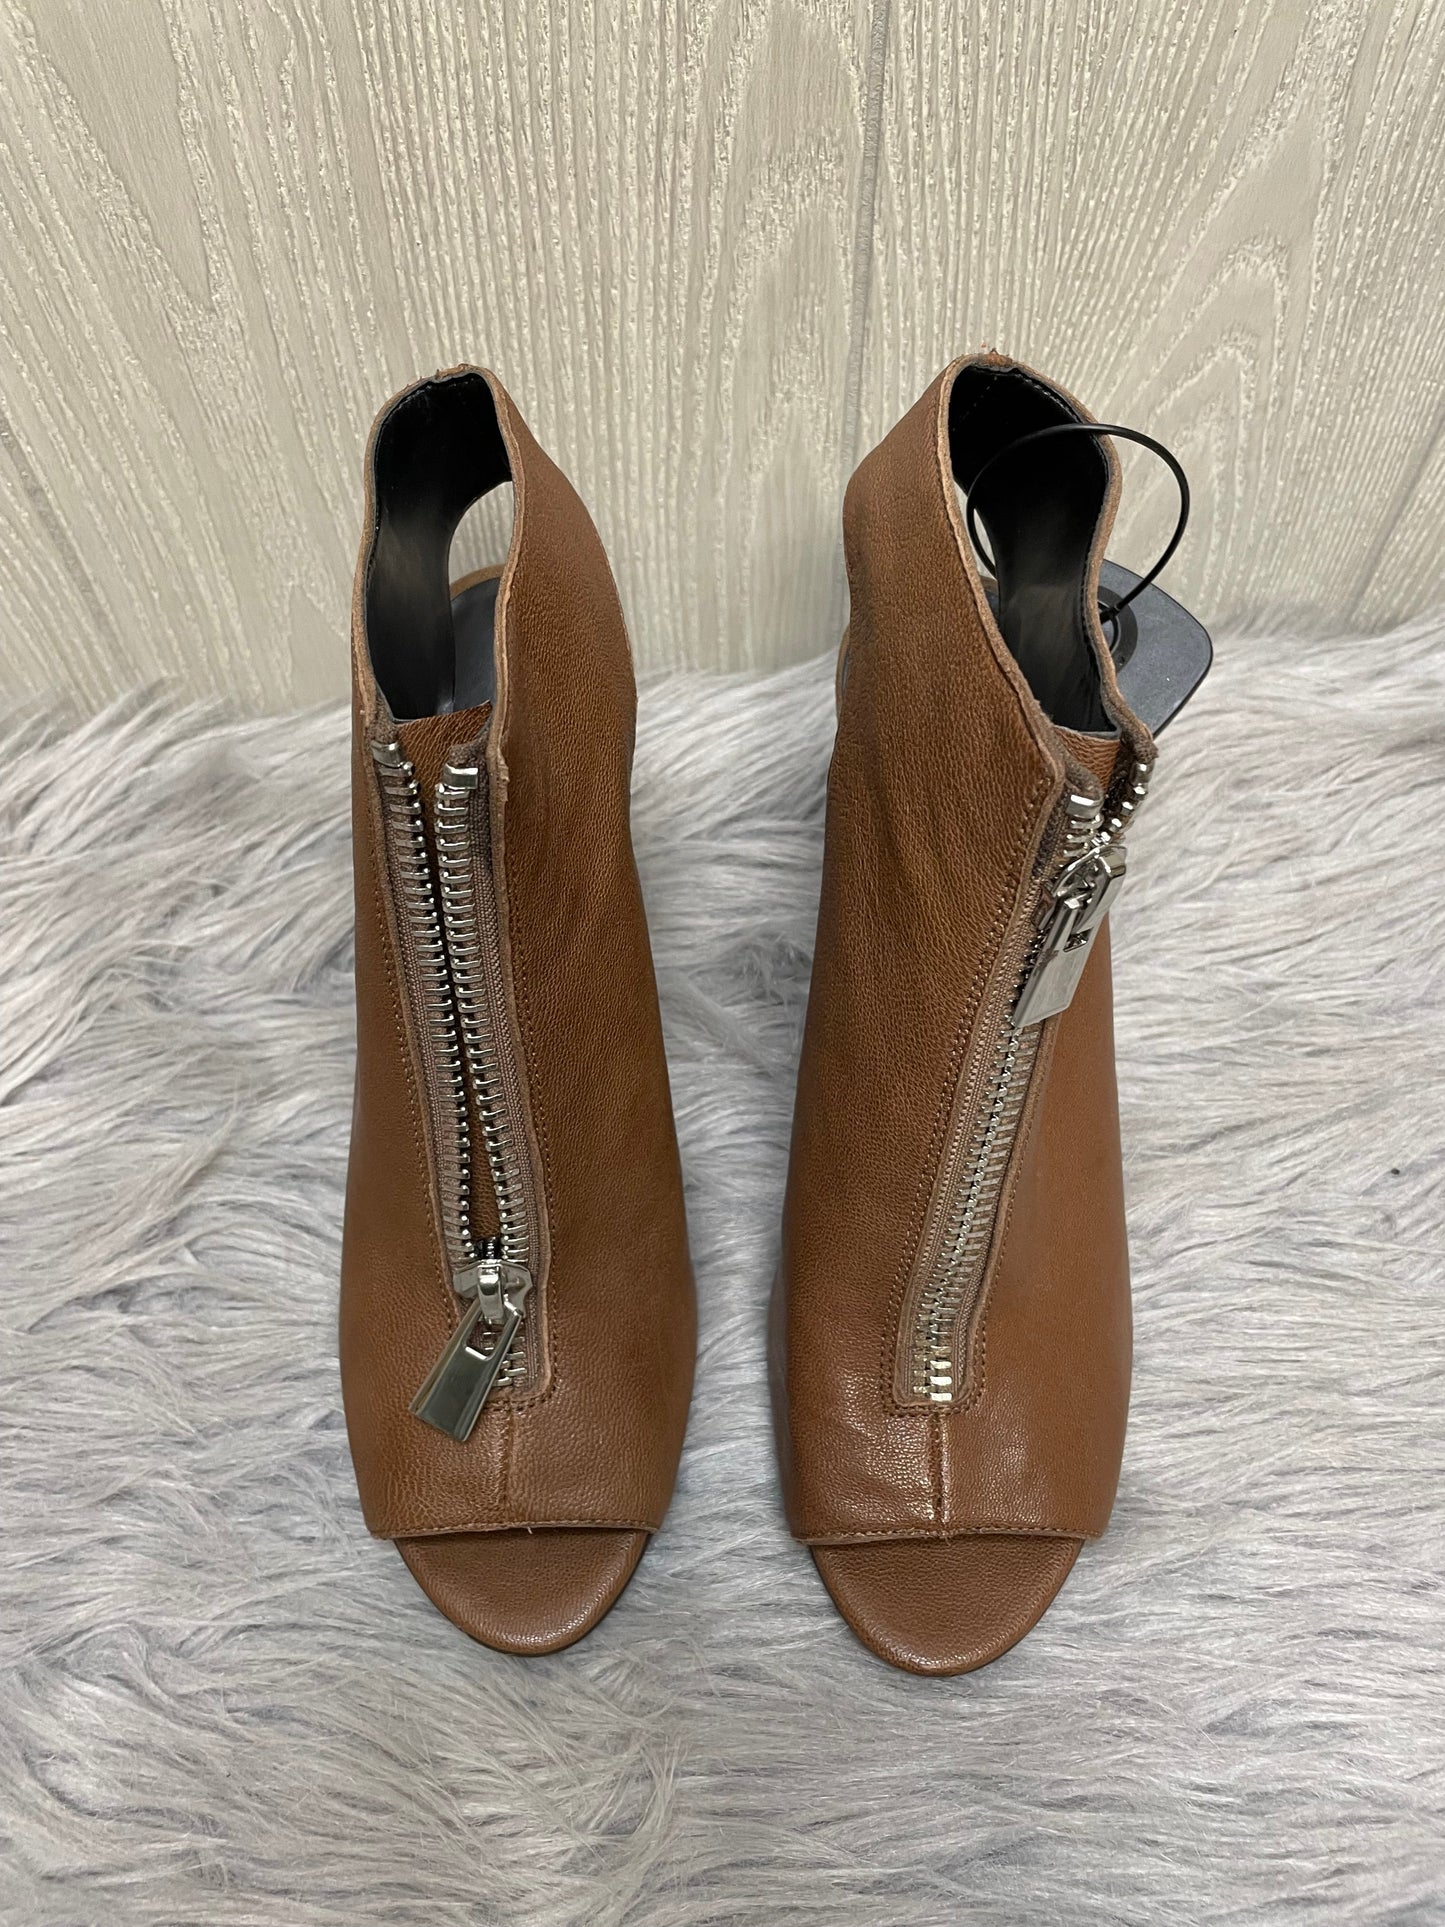 Brown Shoes Heels Wedge Nine West, Size 9